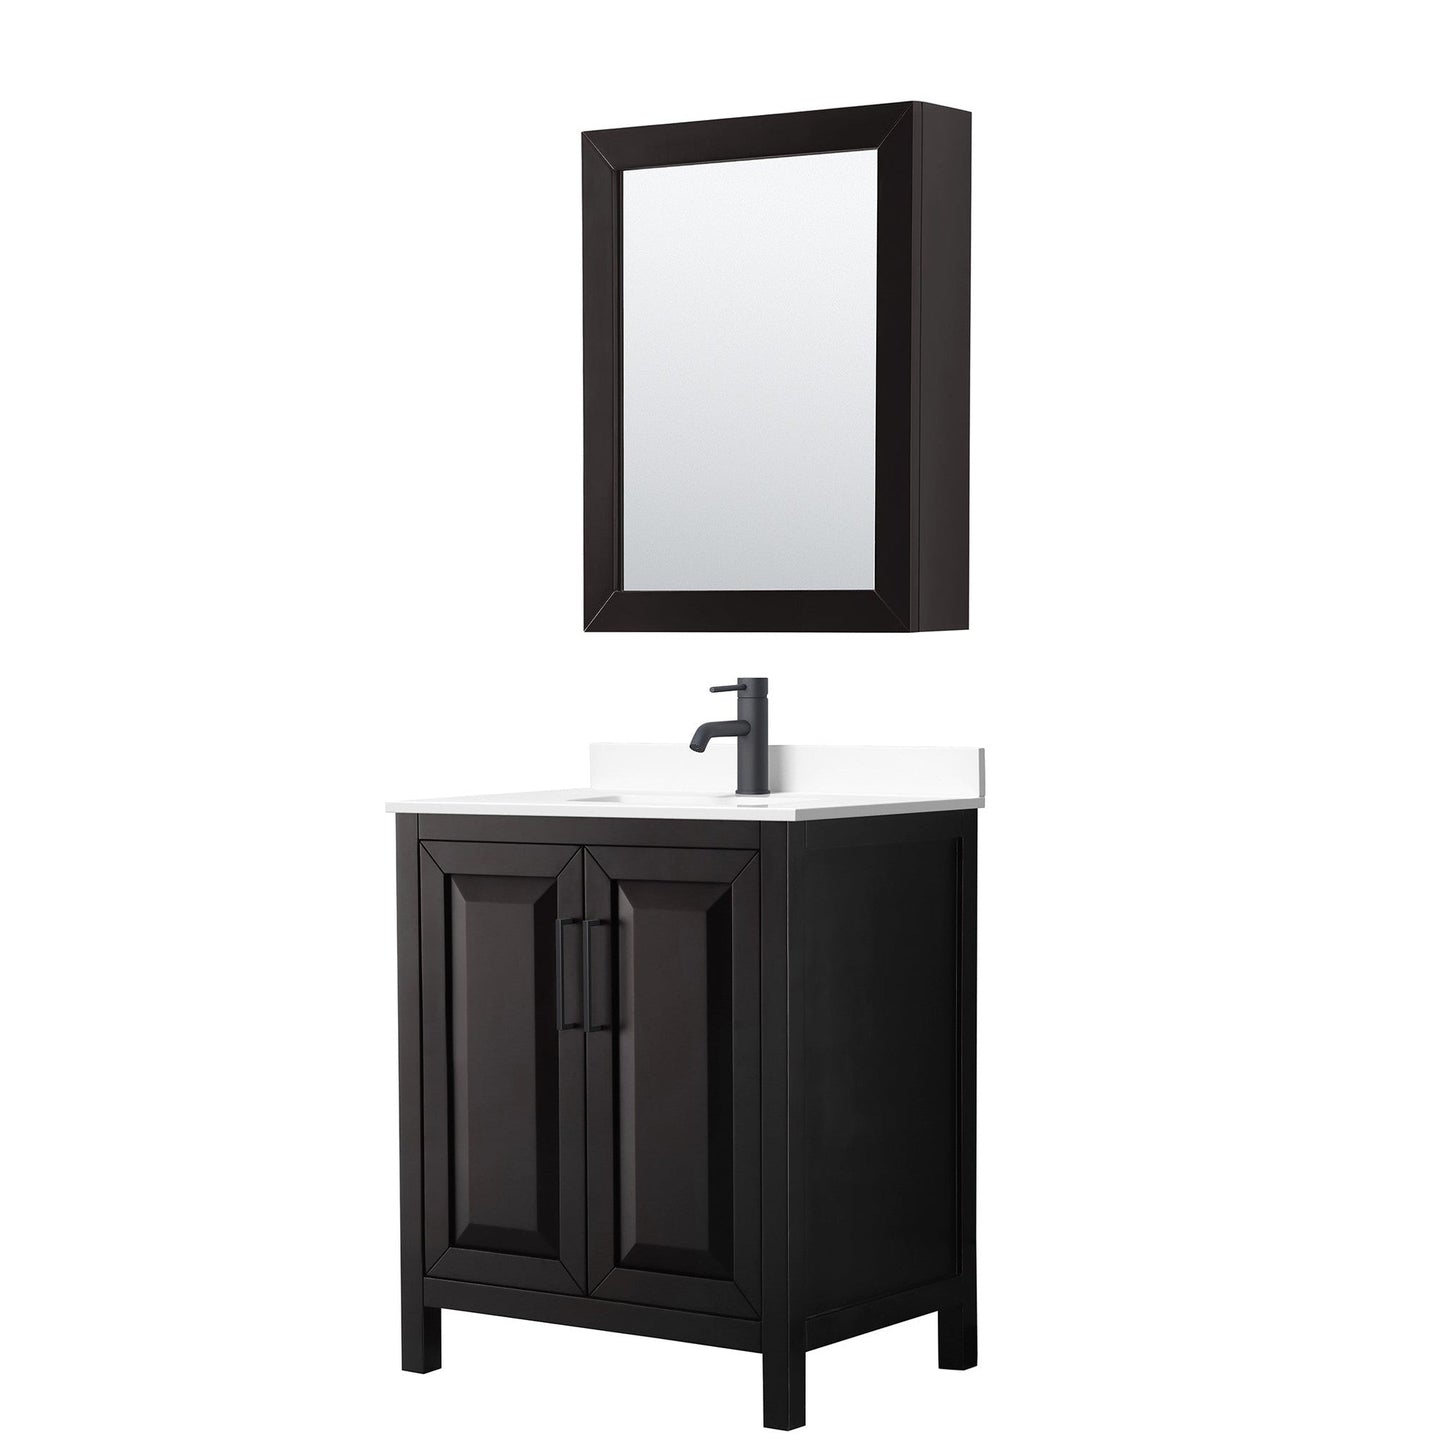 Daria 30" Single Bathroom Vanity in Dark Espresso, White Cultured Marble Countertop, Undermount Square Sink, Matte Black Trim, Medicine Cabinet